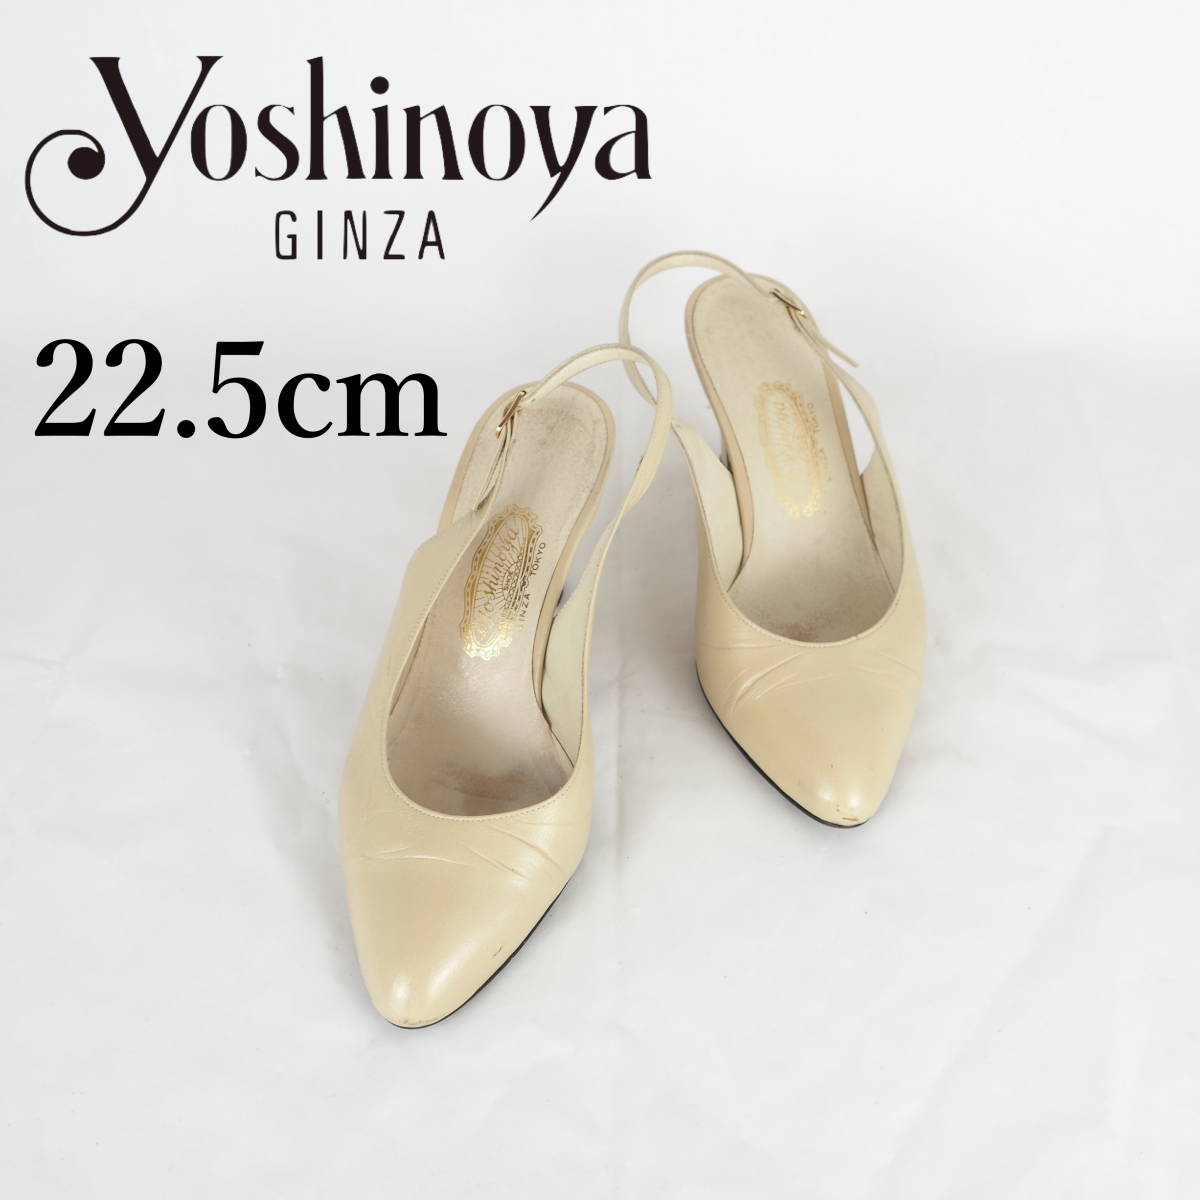 LK9334*Ginza yoshinoya*ginza yoshinoya*дамы насосы задних ремней*22,5 см*бежевый